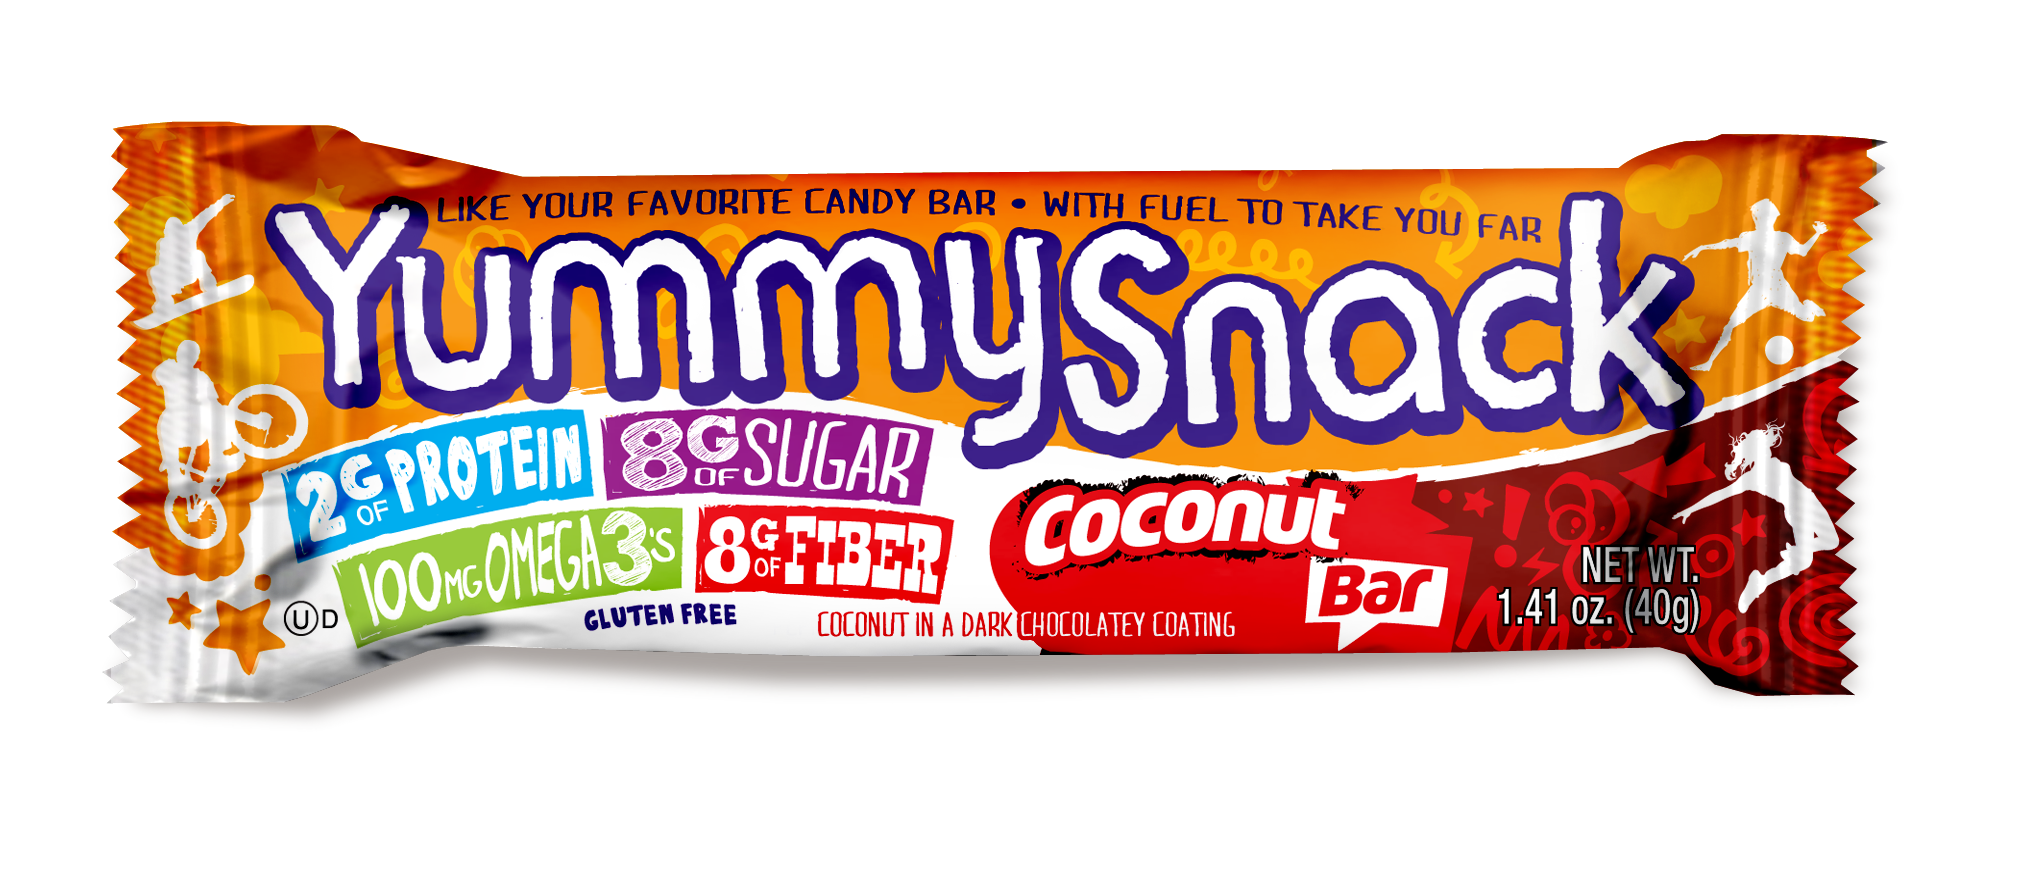 YummyHealth Company Raises the Candy Bar